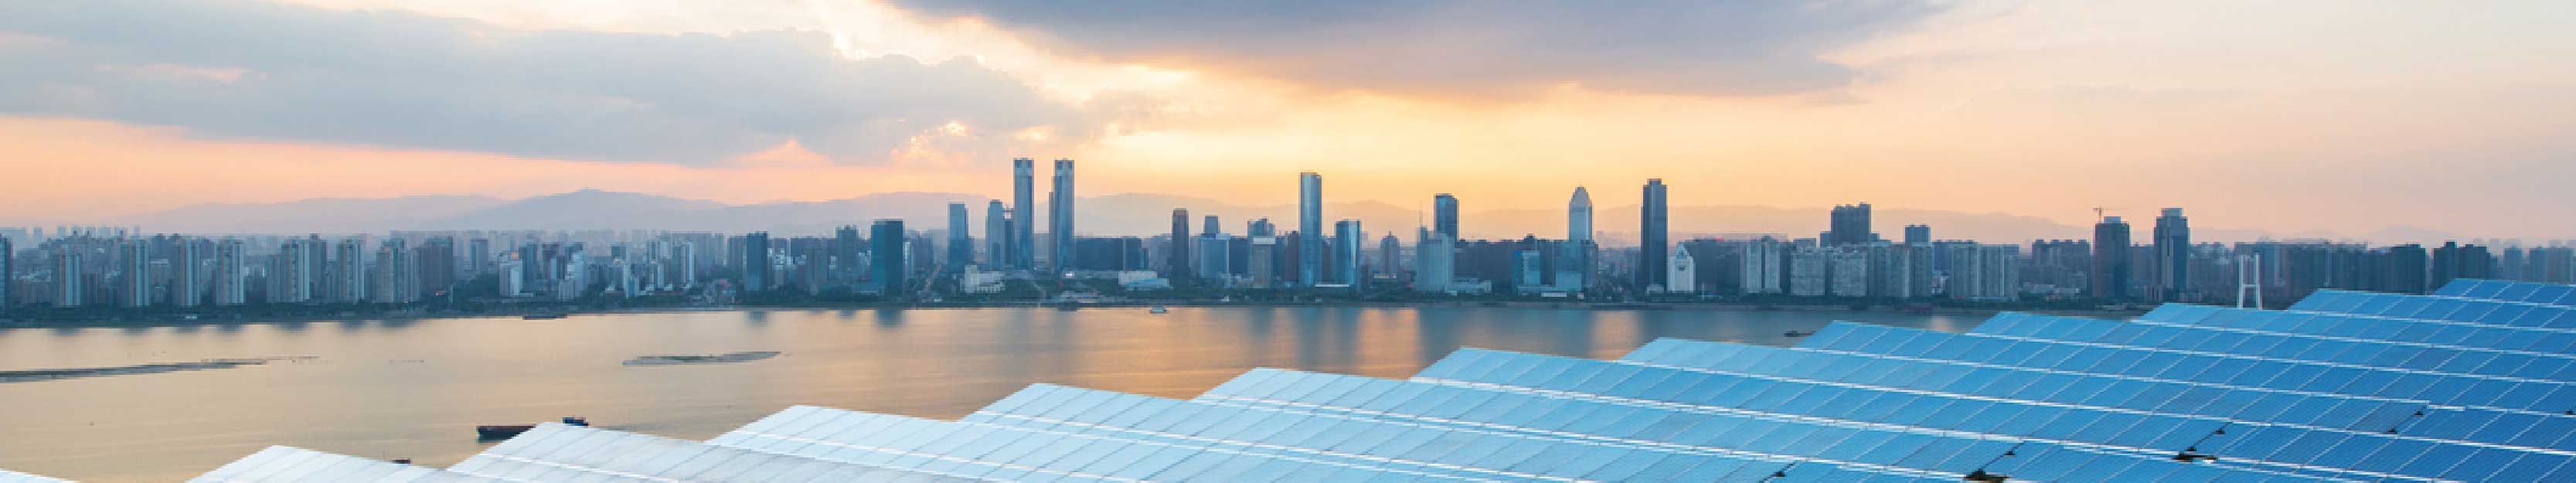 Solar panels in Singapore